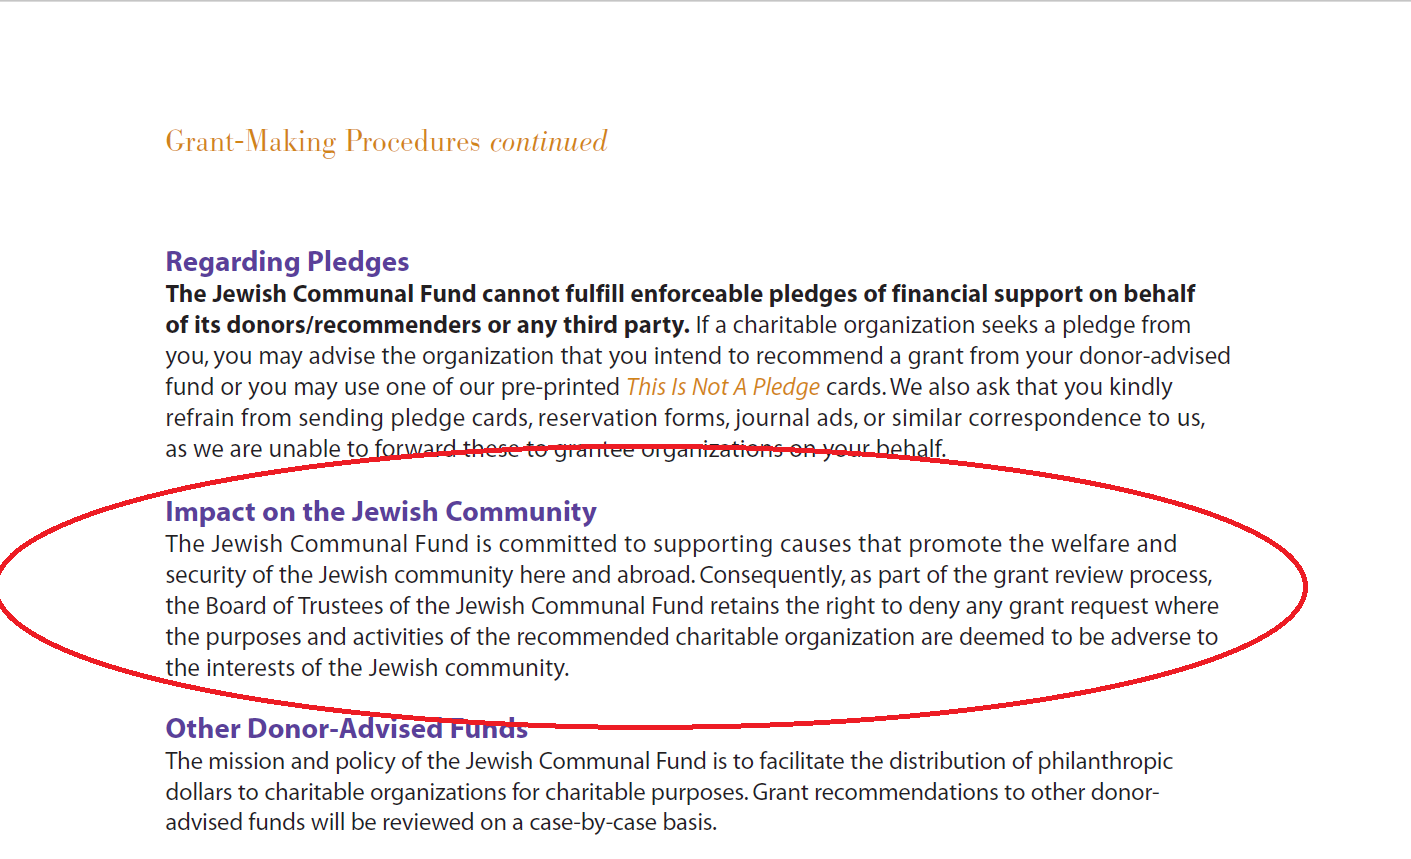 Grantmaking guidelines of UJA-Federation's Jewish Communal Fund.